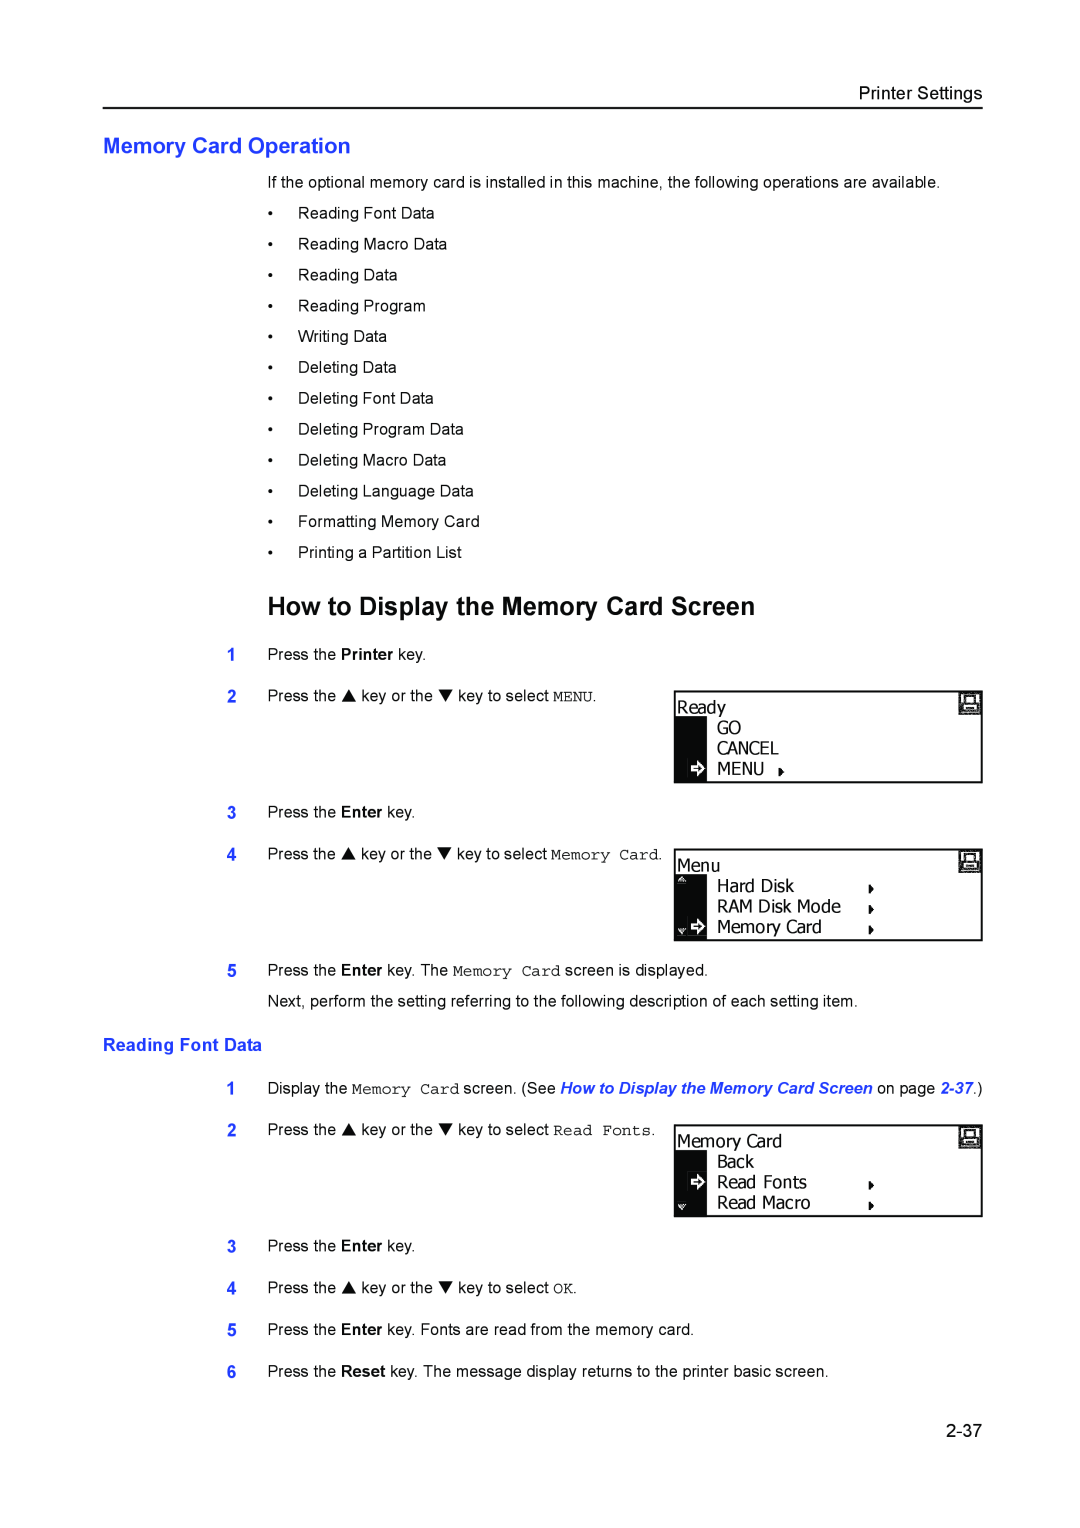 Kyocera 2550, 2050 How to Display the Memory Card Screen, Memory Card Operation, Reading Font Data, 2-37, Printer Settings 